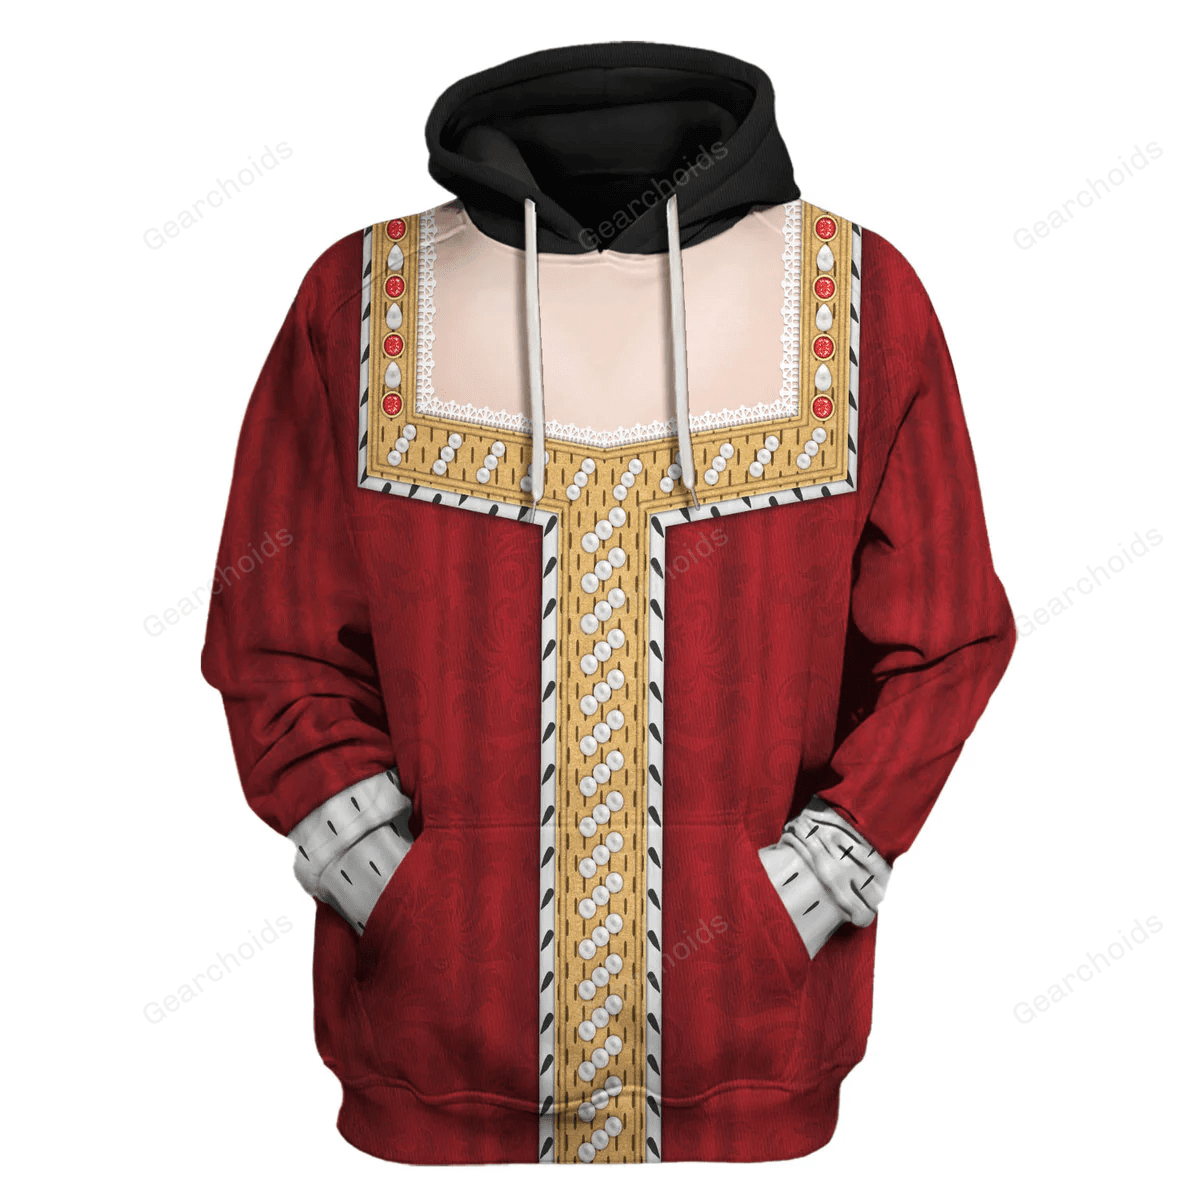 Gearchoids Elizabeth of York Costume Hoodie Sweatshirt T-Shirt Tracksuit